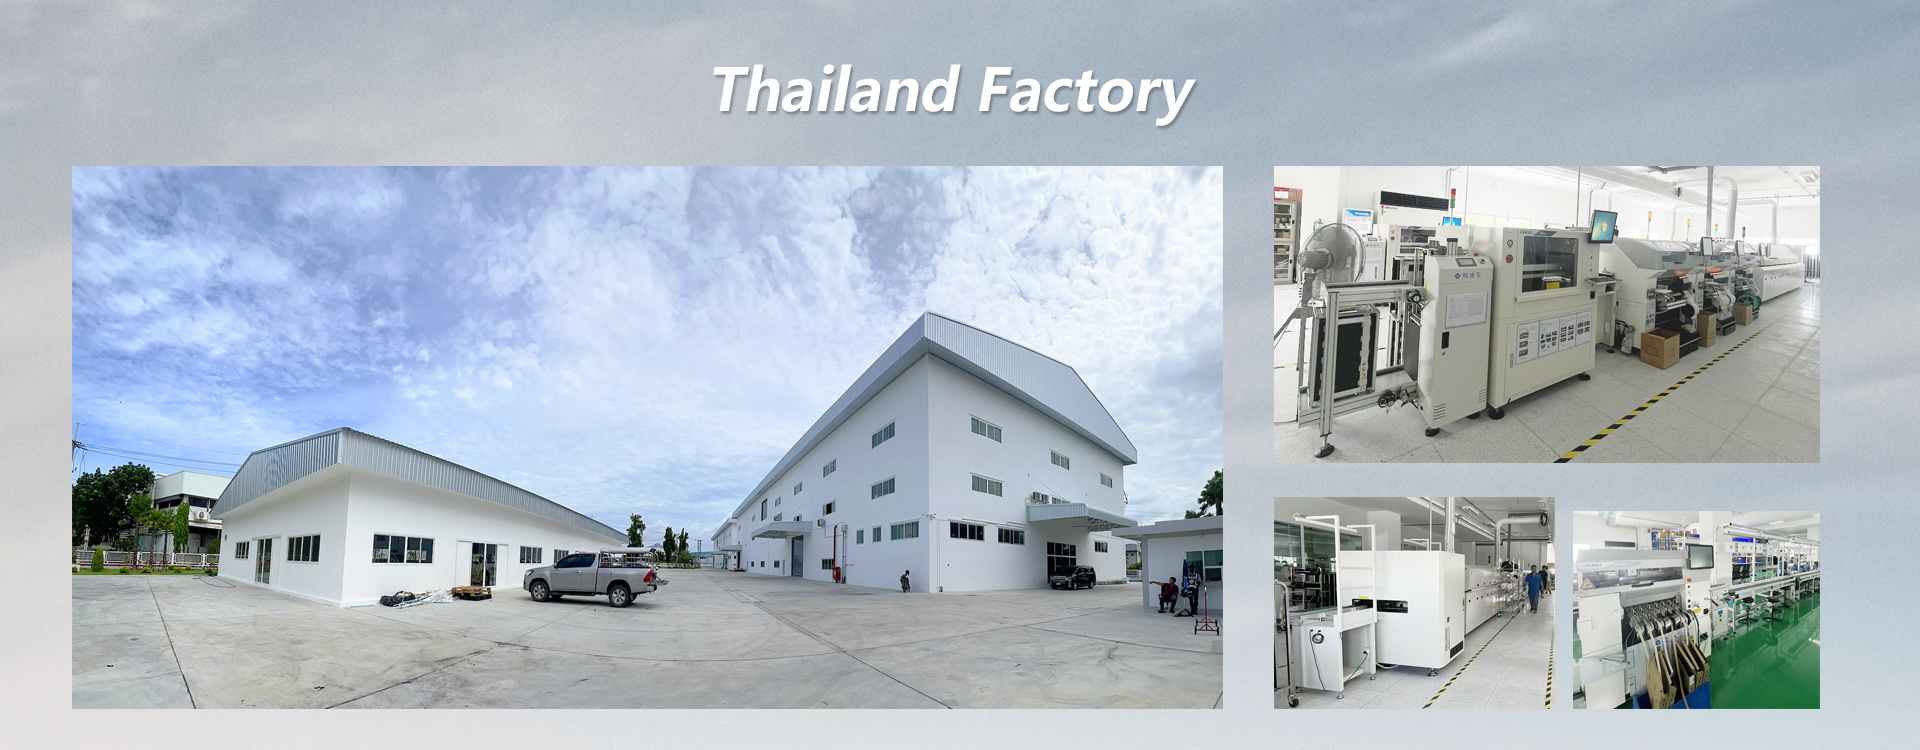 Thailand factory